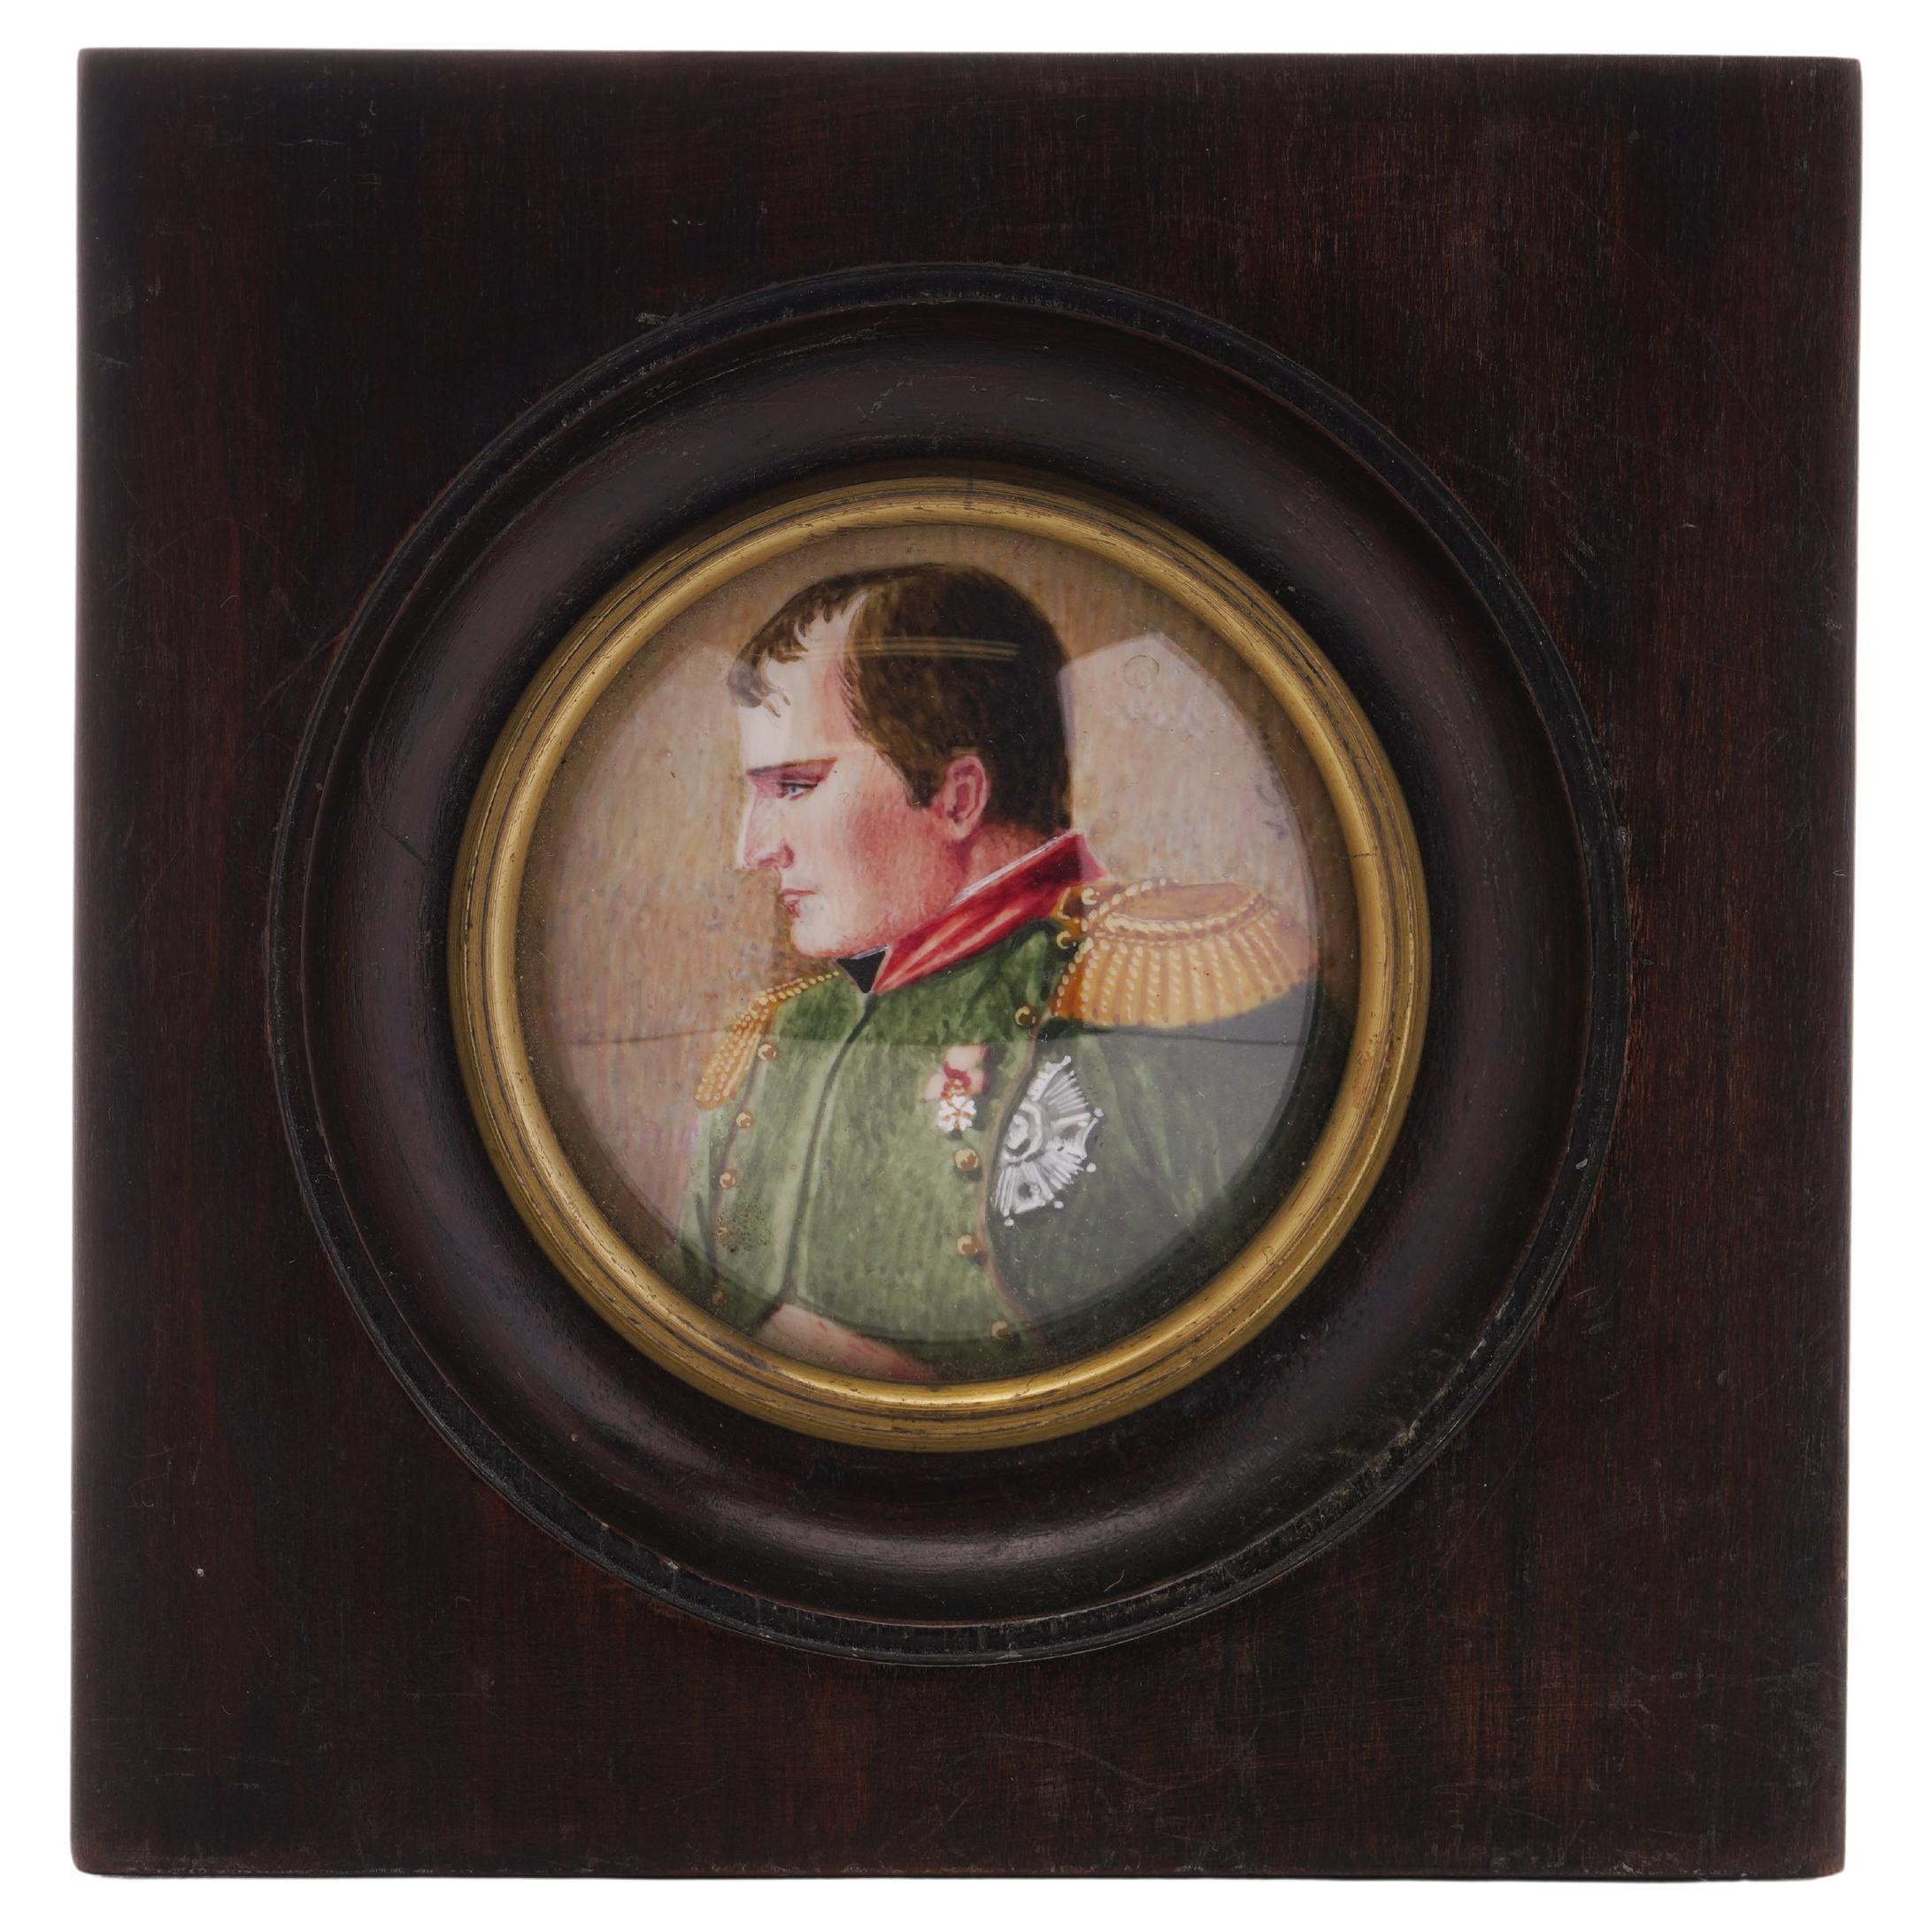 Miniatur-Porträt von Napoleon I., handgemalt im 19. Jahrhundert 